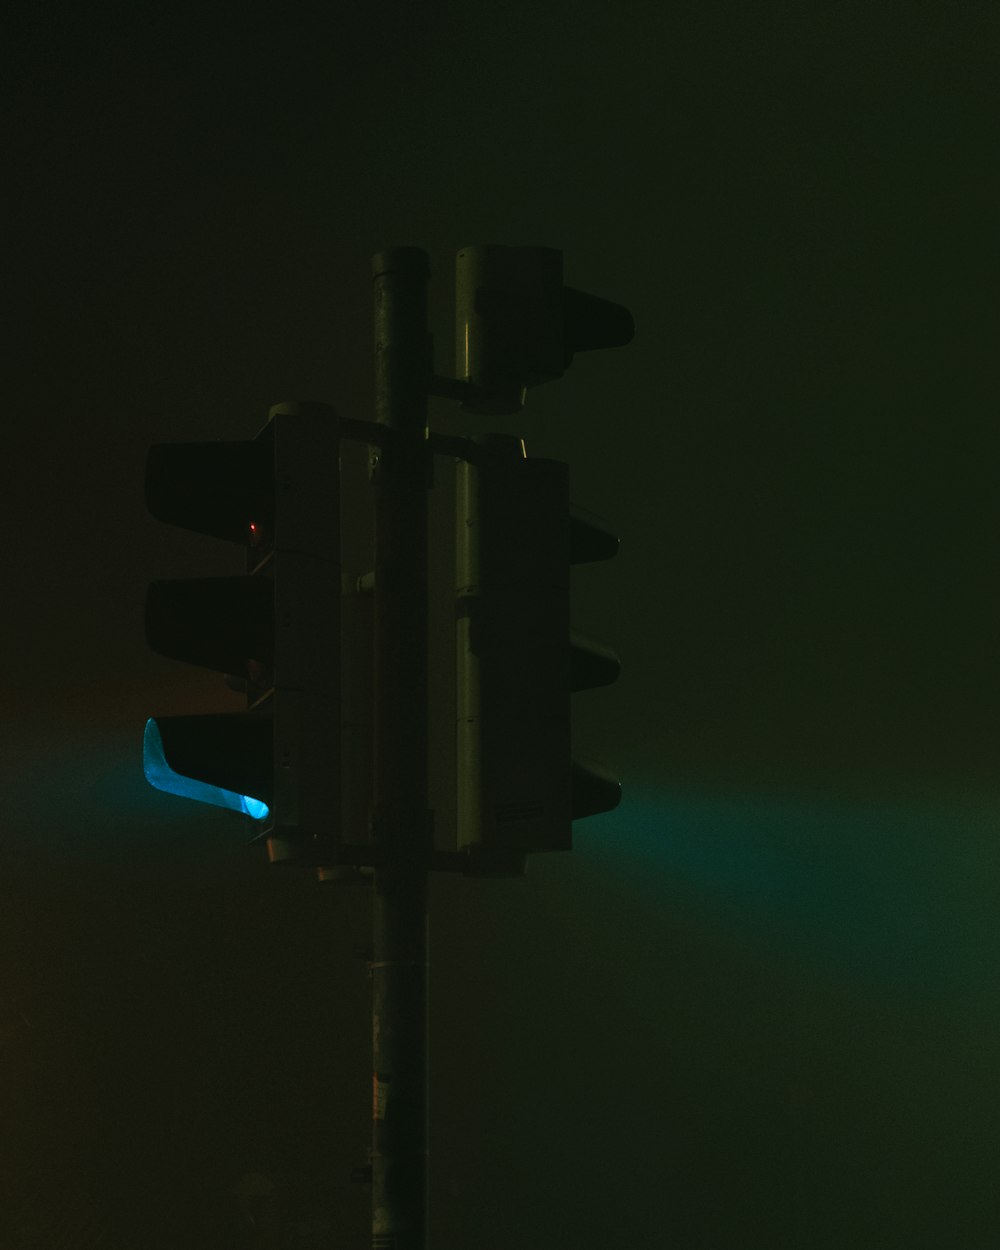 a traffic light with a blue light